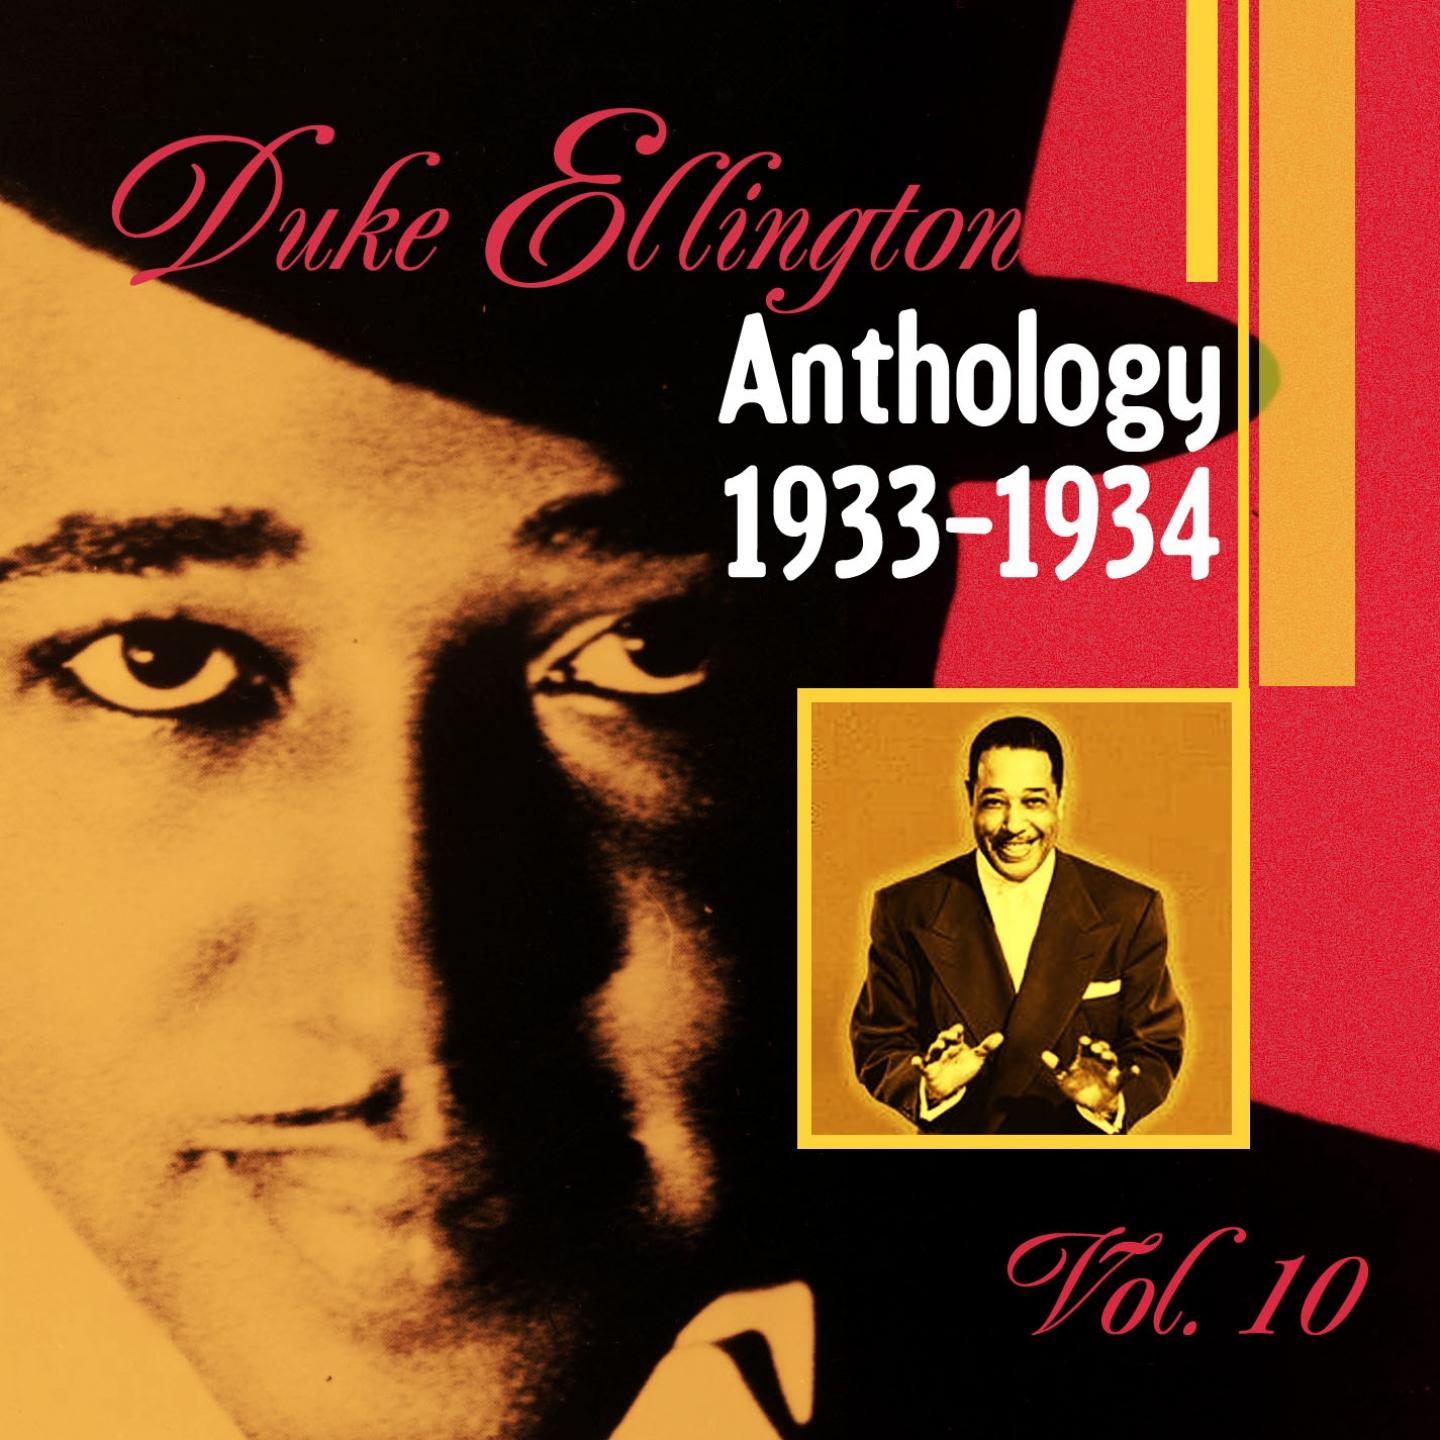 The Duke Ellington Anthology Vol. 10 (1933-1934)